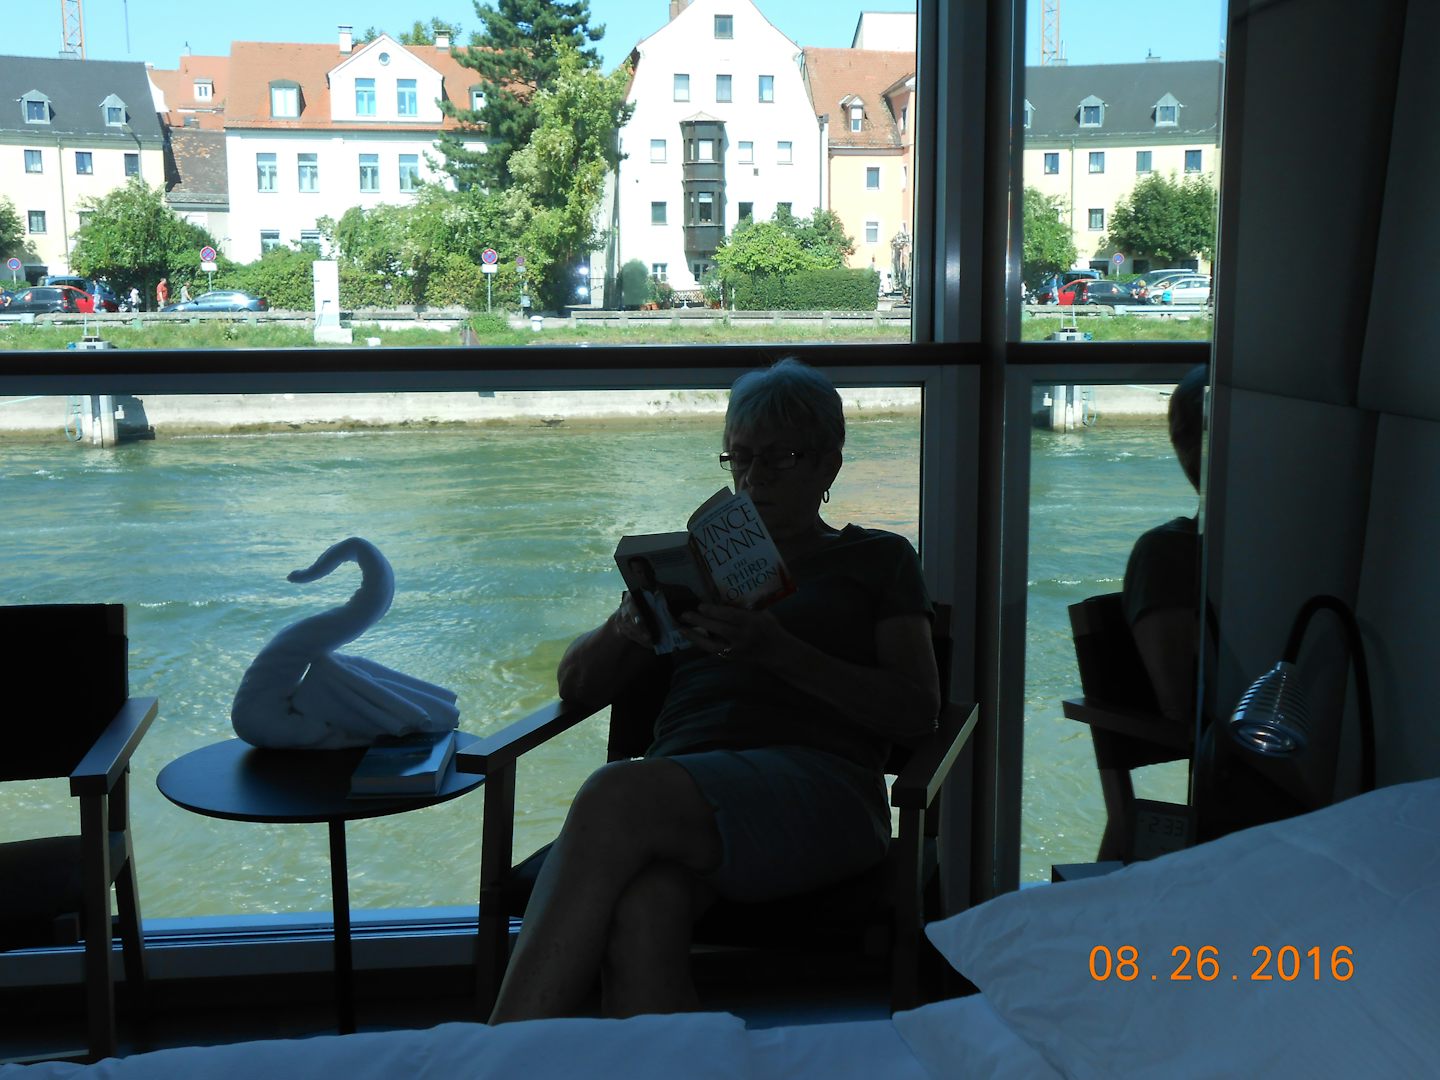 Arriving in Regensburg, on the Danube...